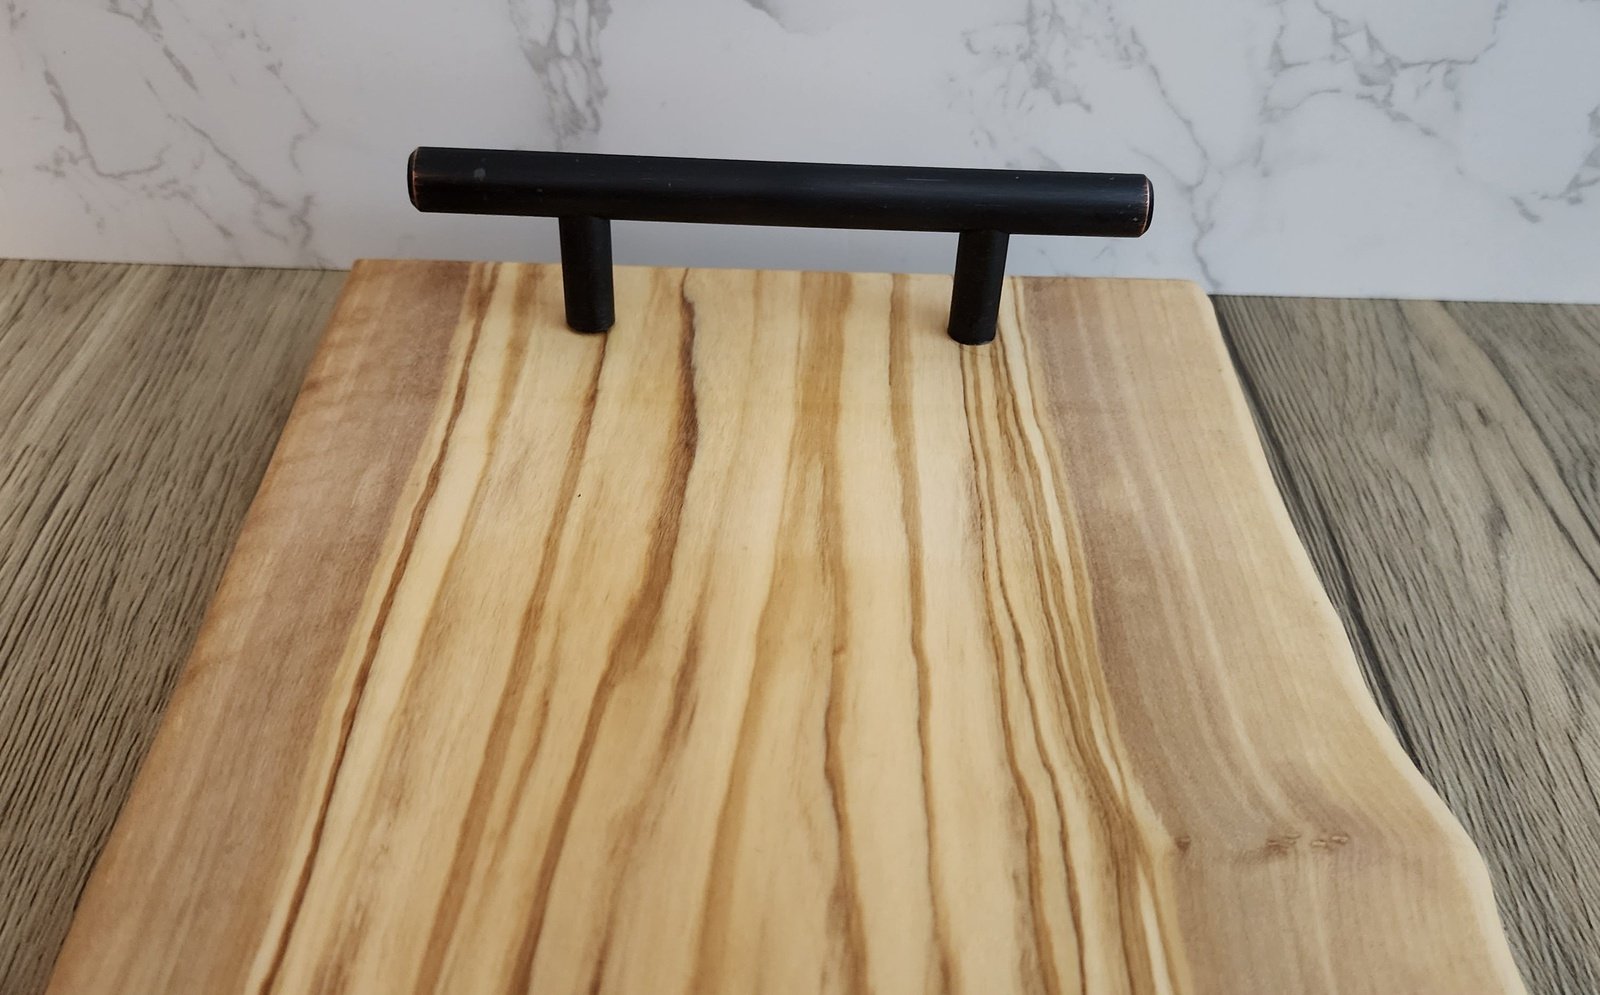 Olive Wood with Handle Hardwood Cutting Board